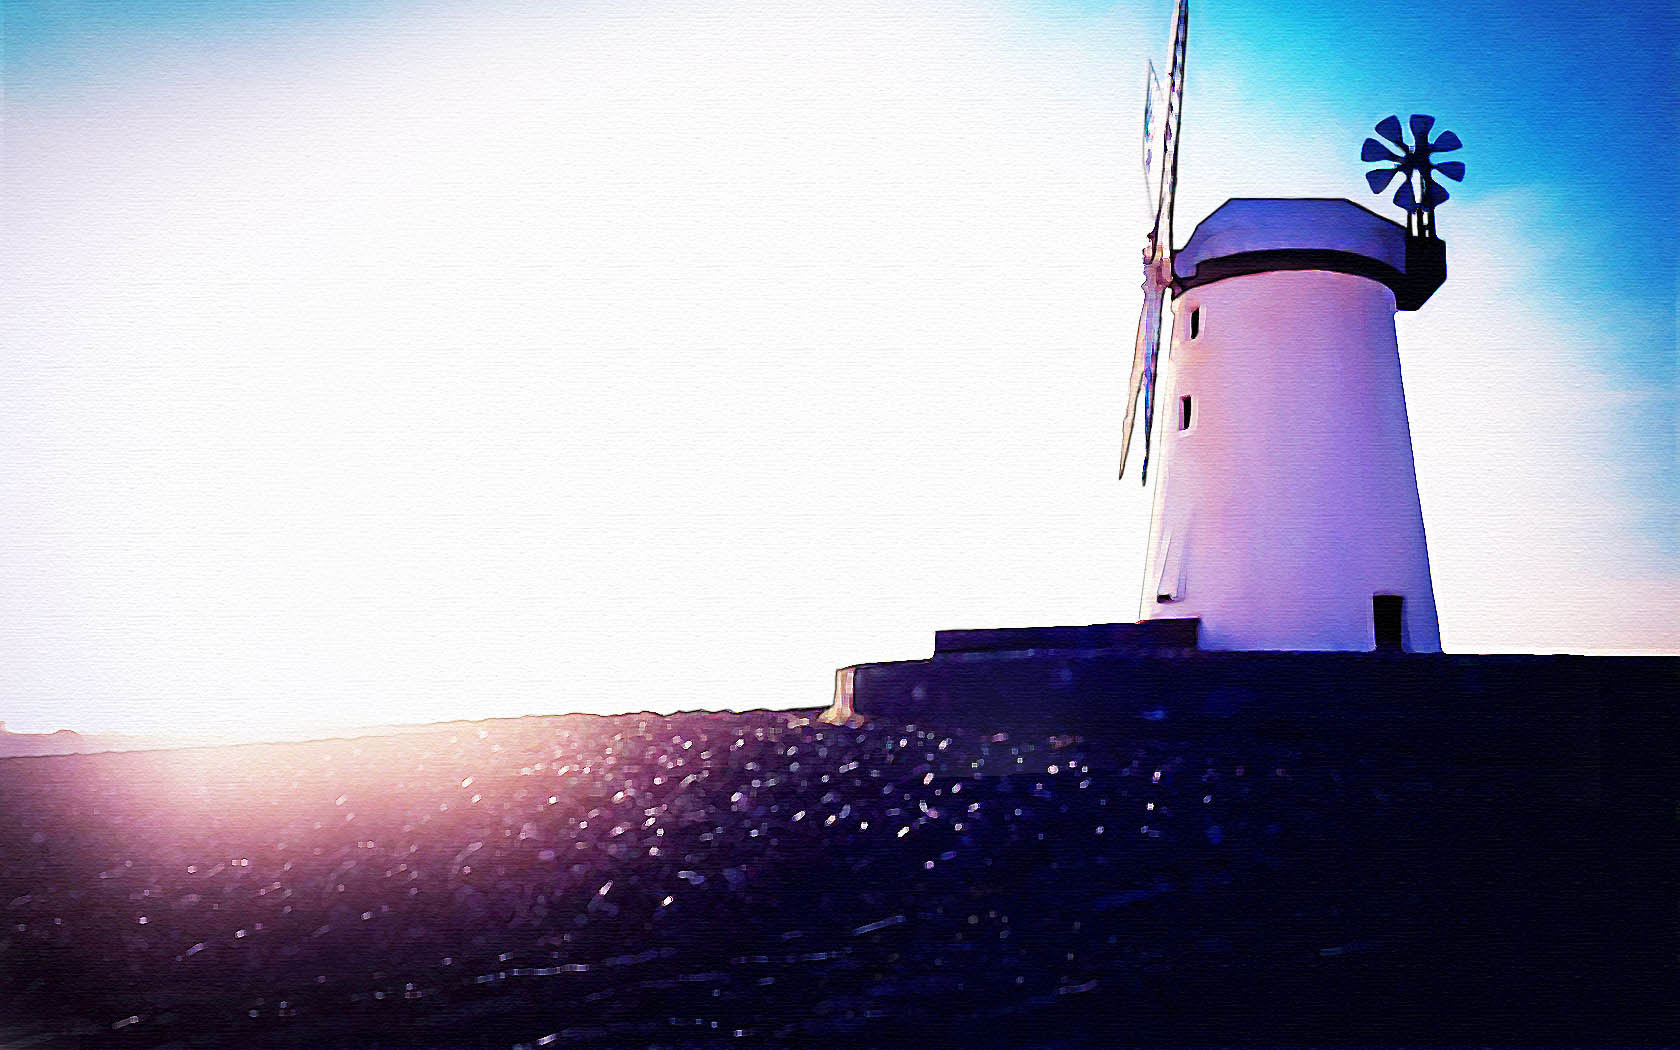 exquisite windmill desktop background picture